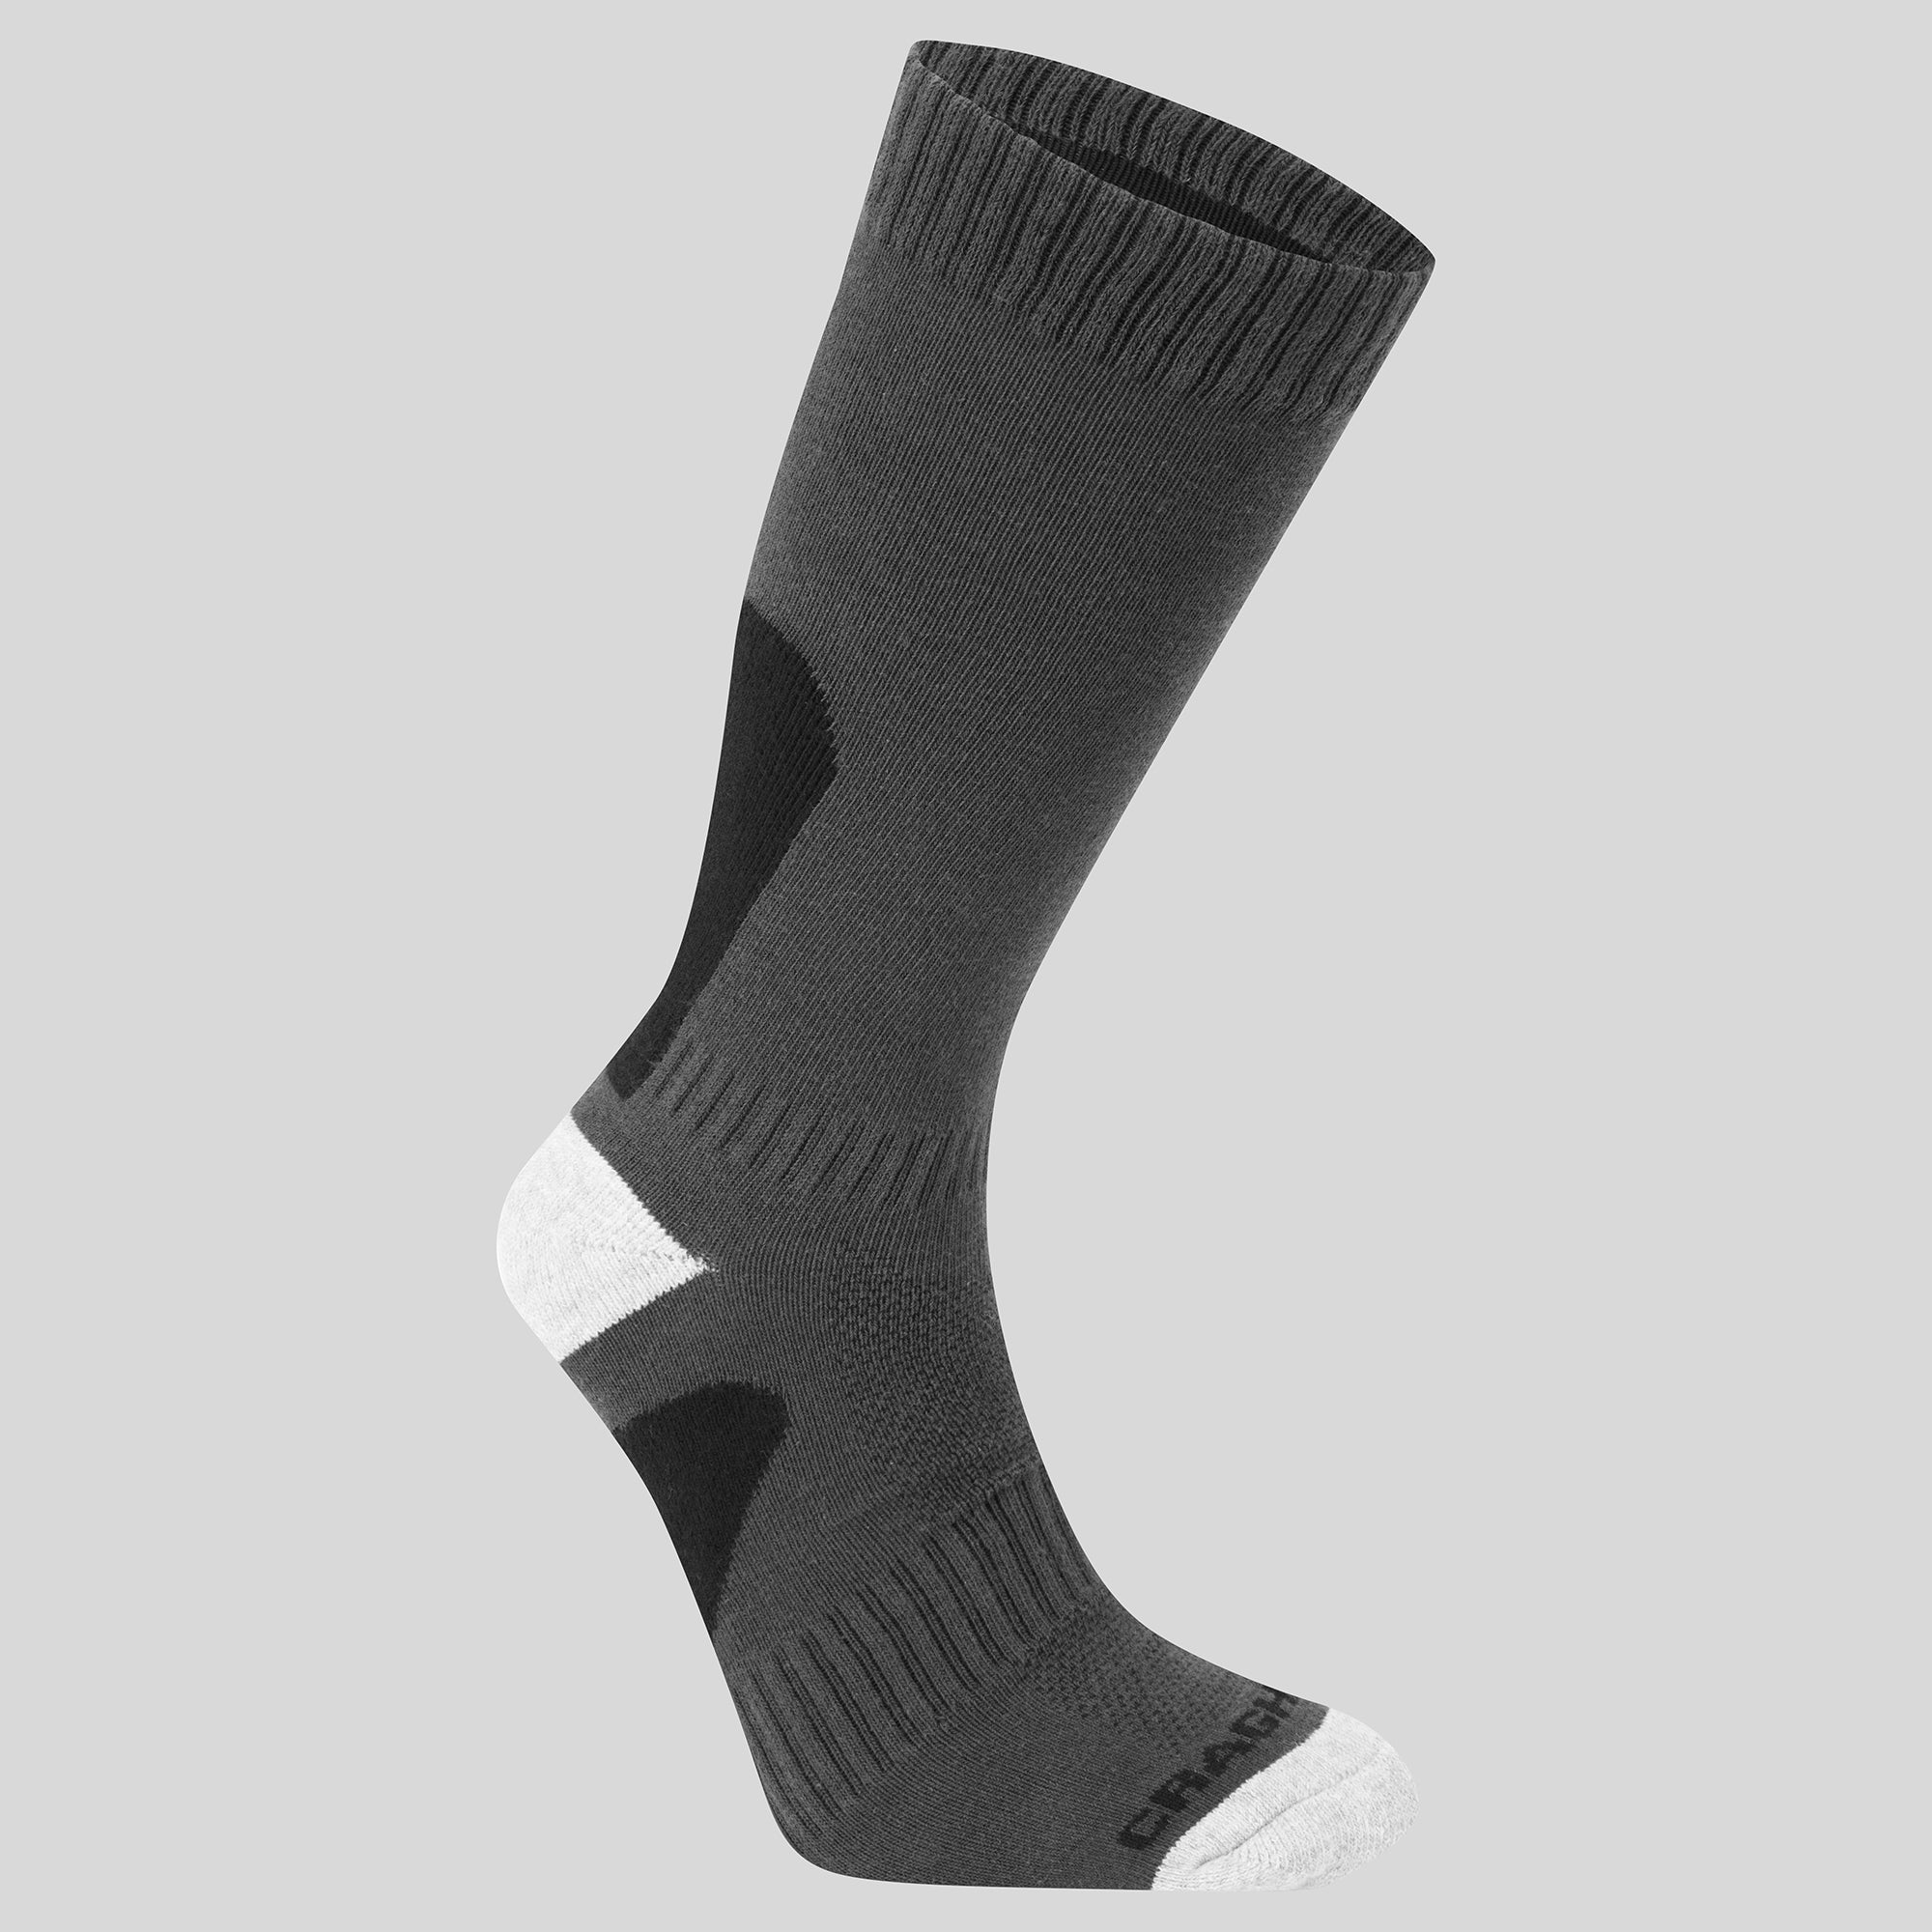 Unisex Insect Shield® Adventure Pro Socks | Black Pepper